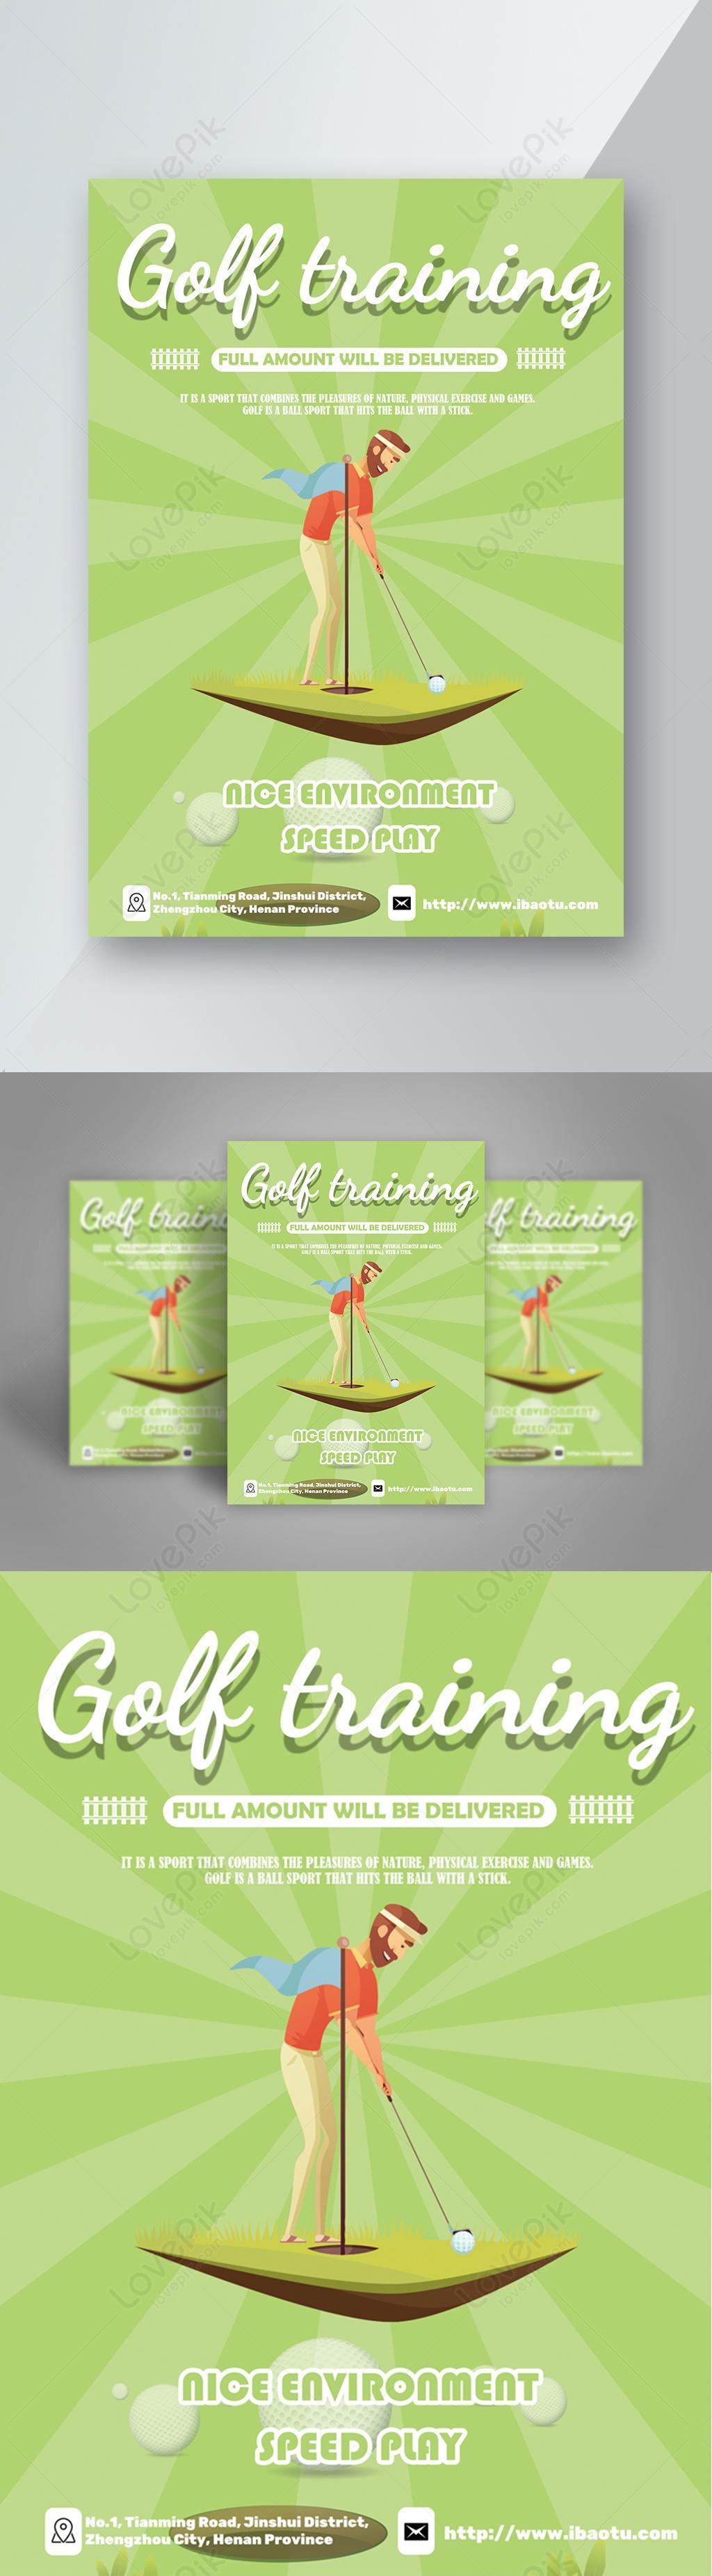 golf it free no download